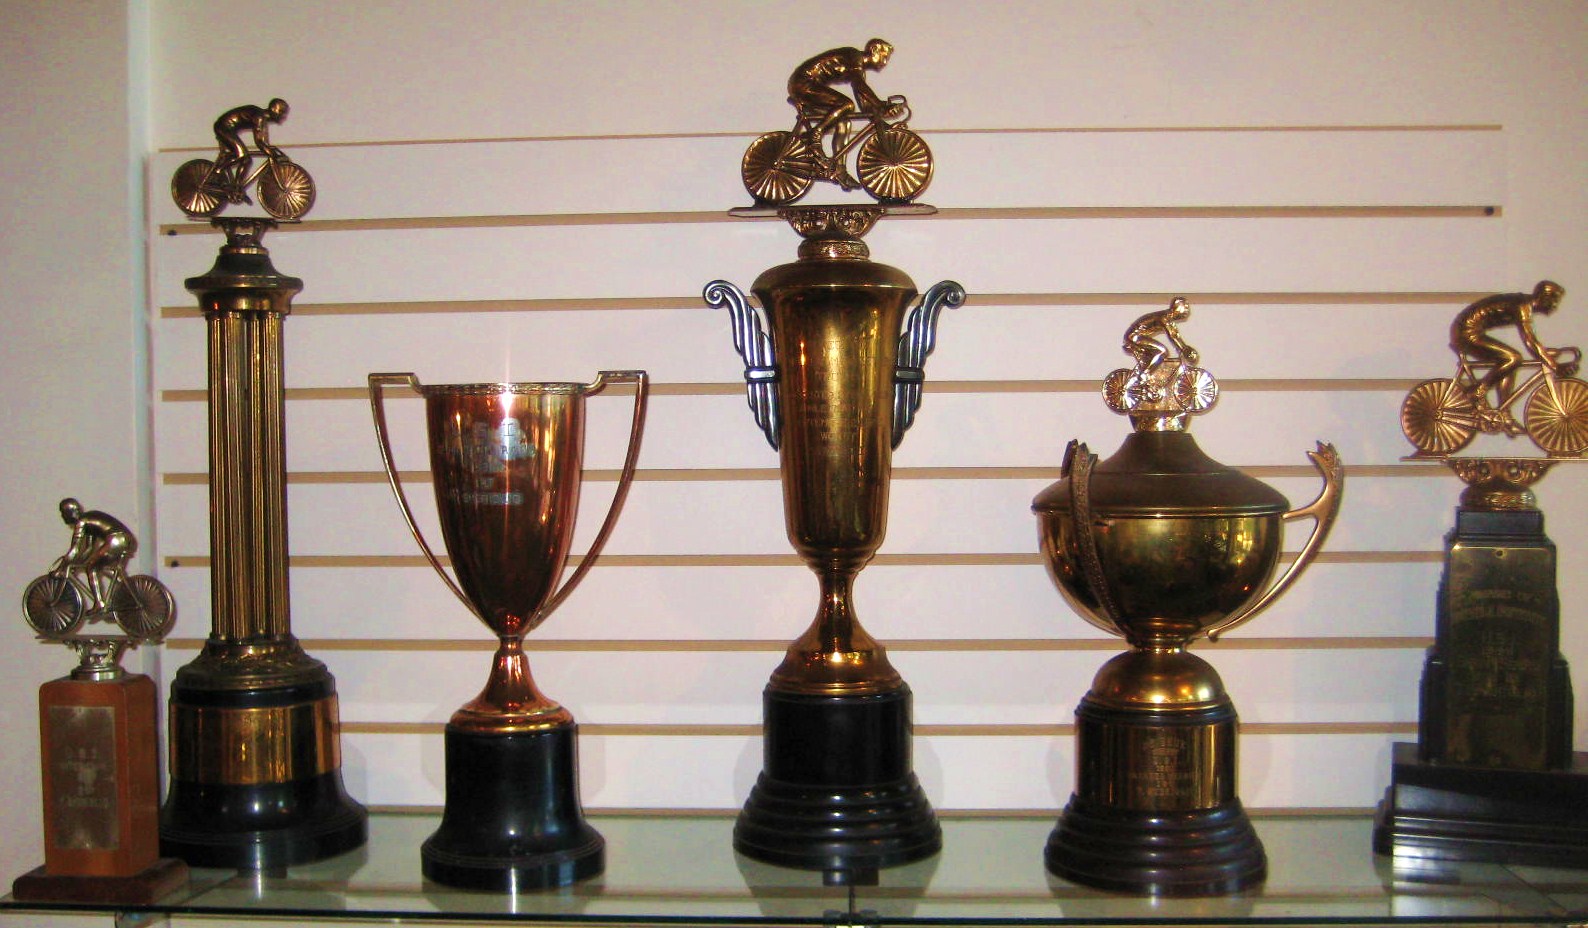 Racing trophies